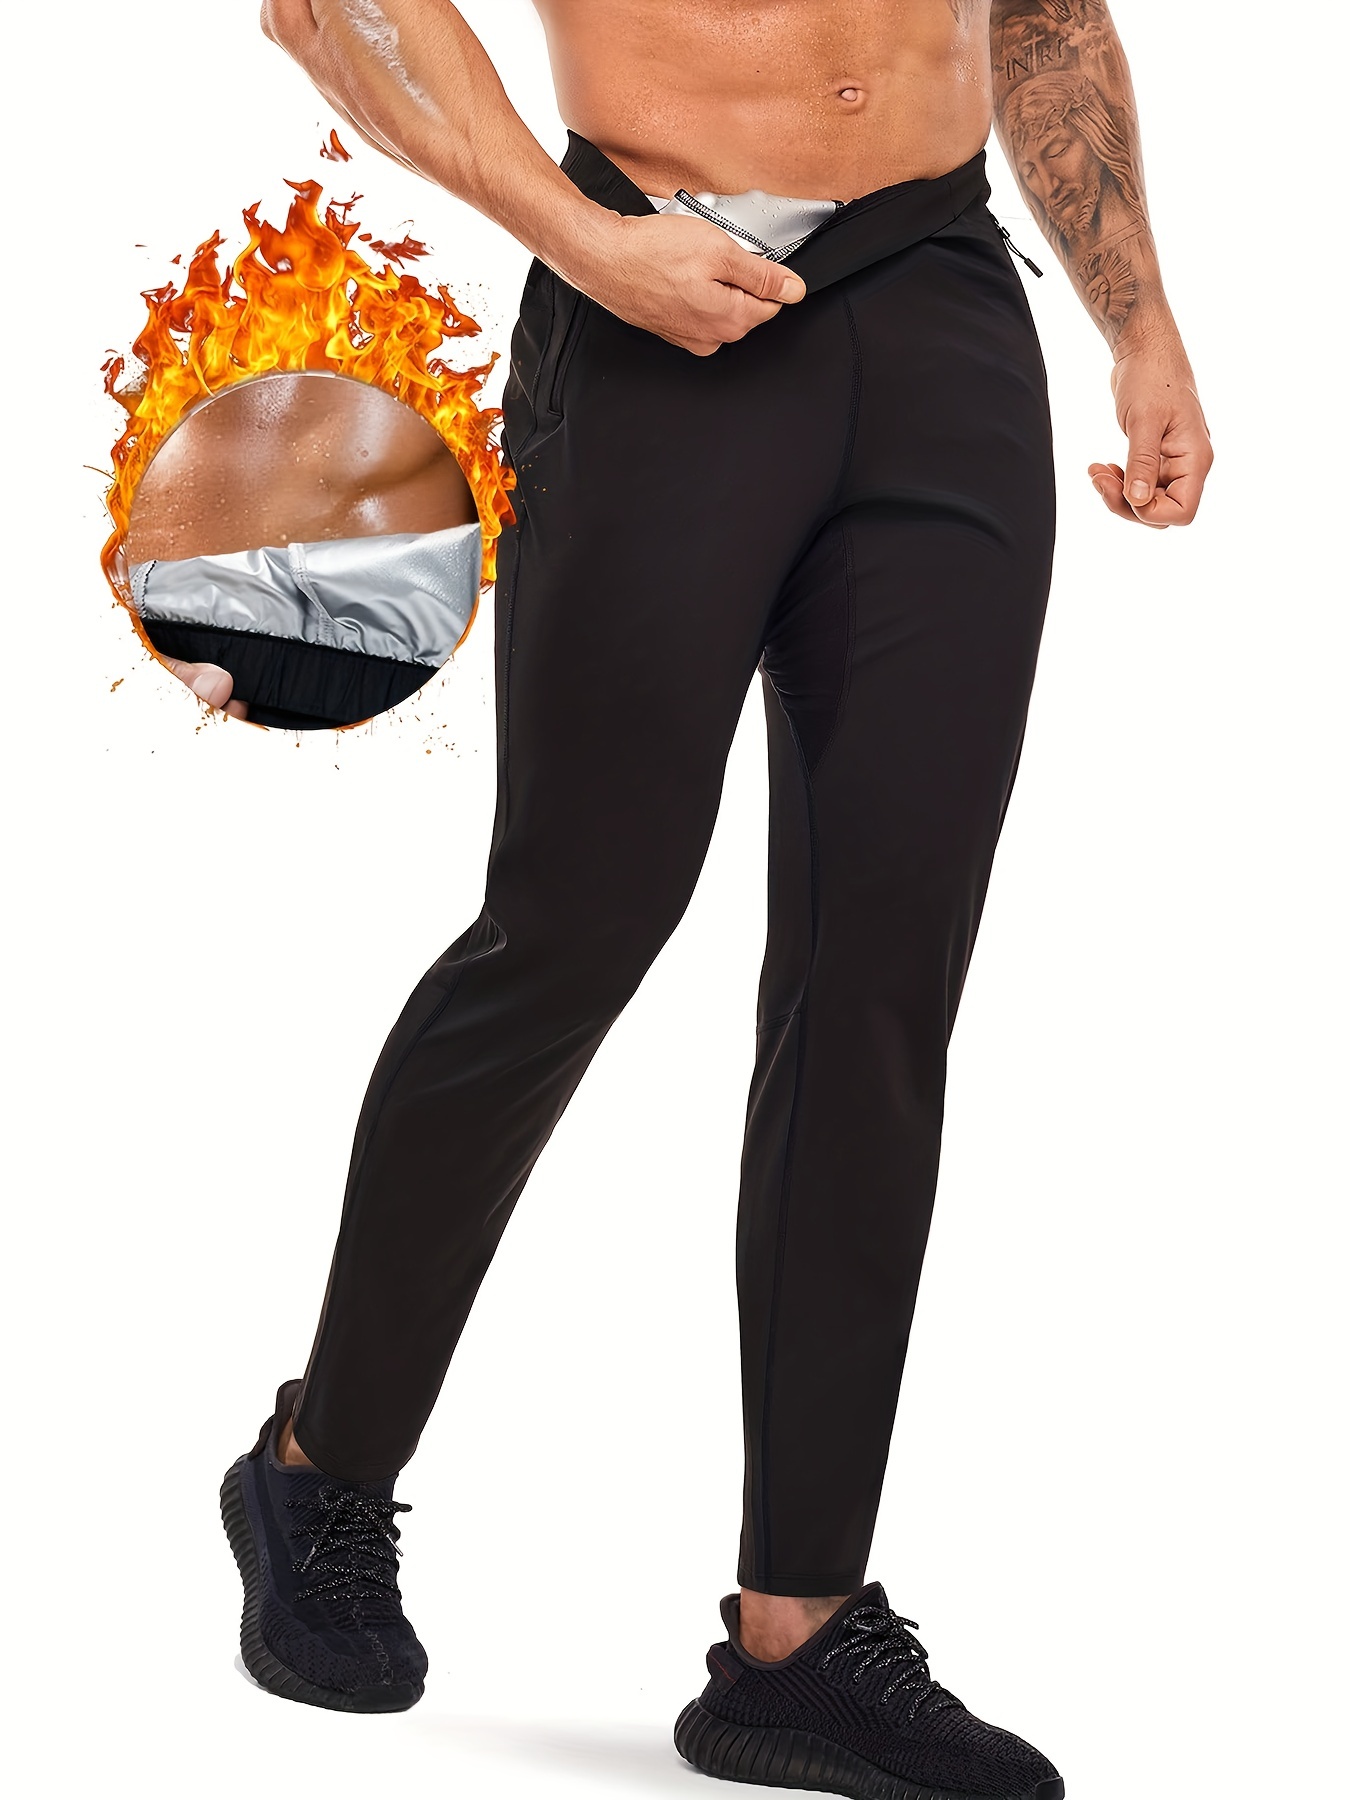 Hot Shapers Slimming Pants Hot Thermo Neoprene Sweat Sauna Body